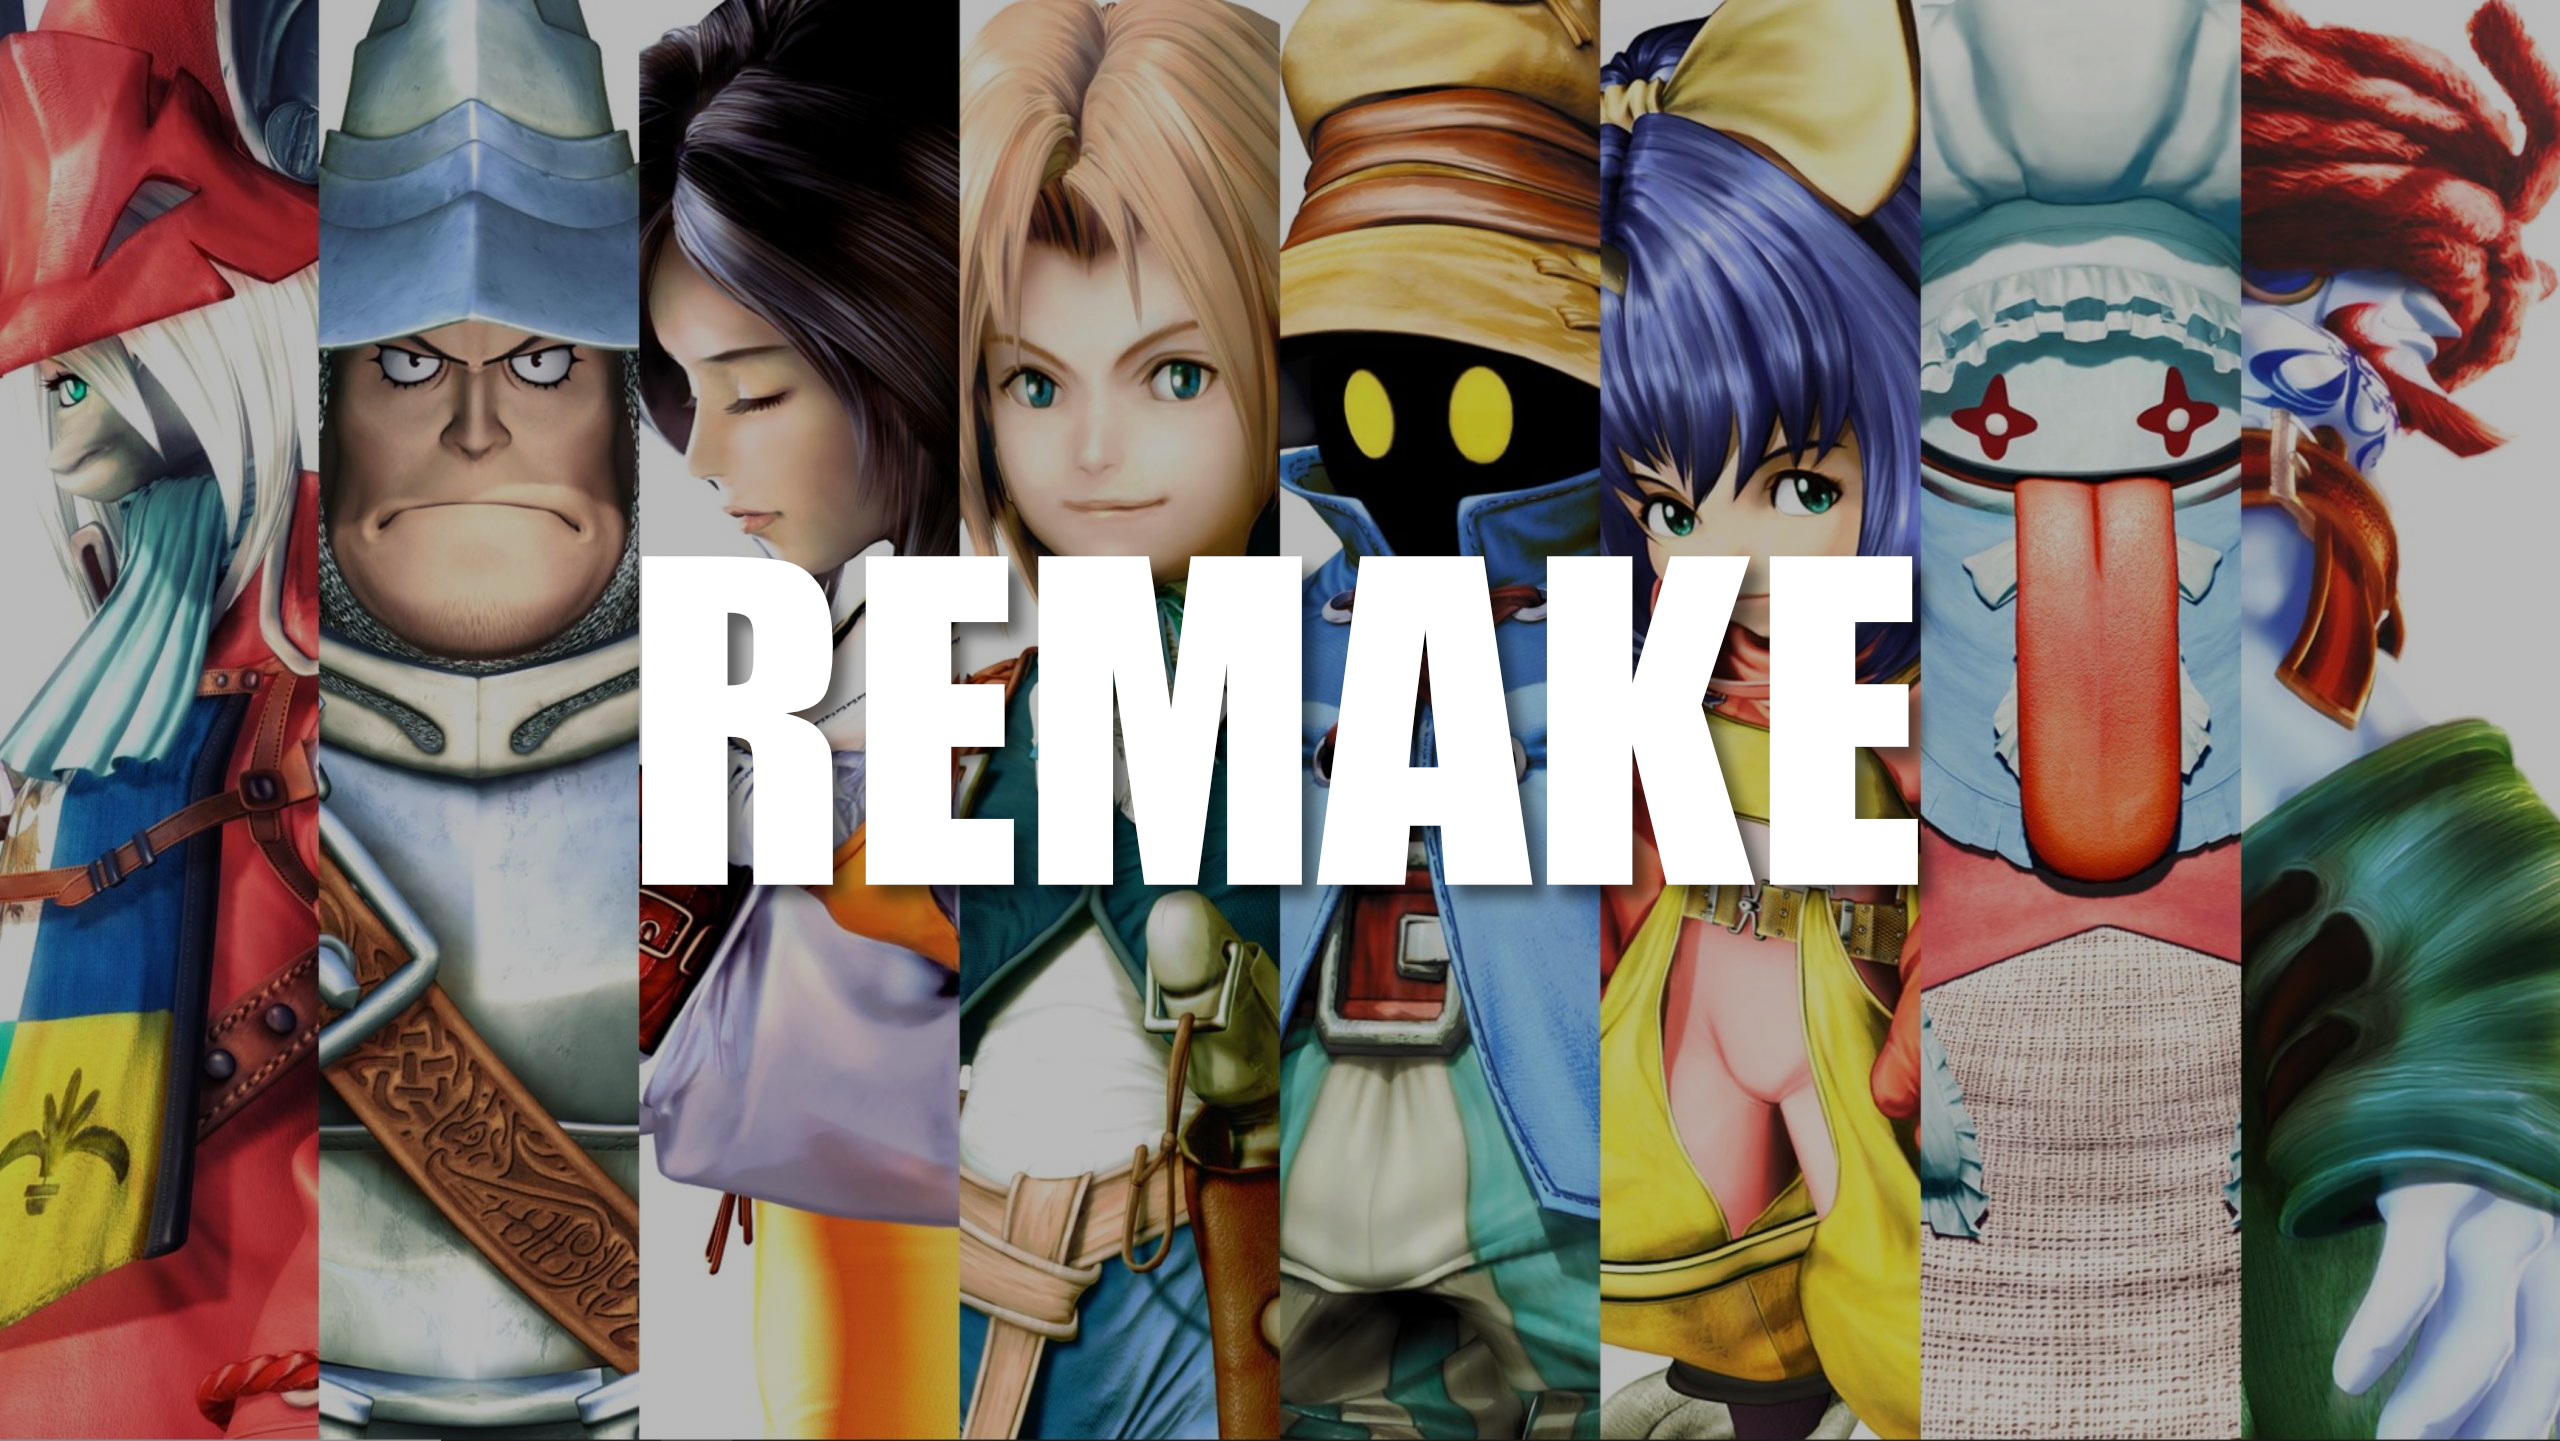 Final Fantasy Union 256: Final Fantasy IX Remake What?